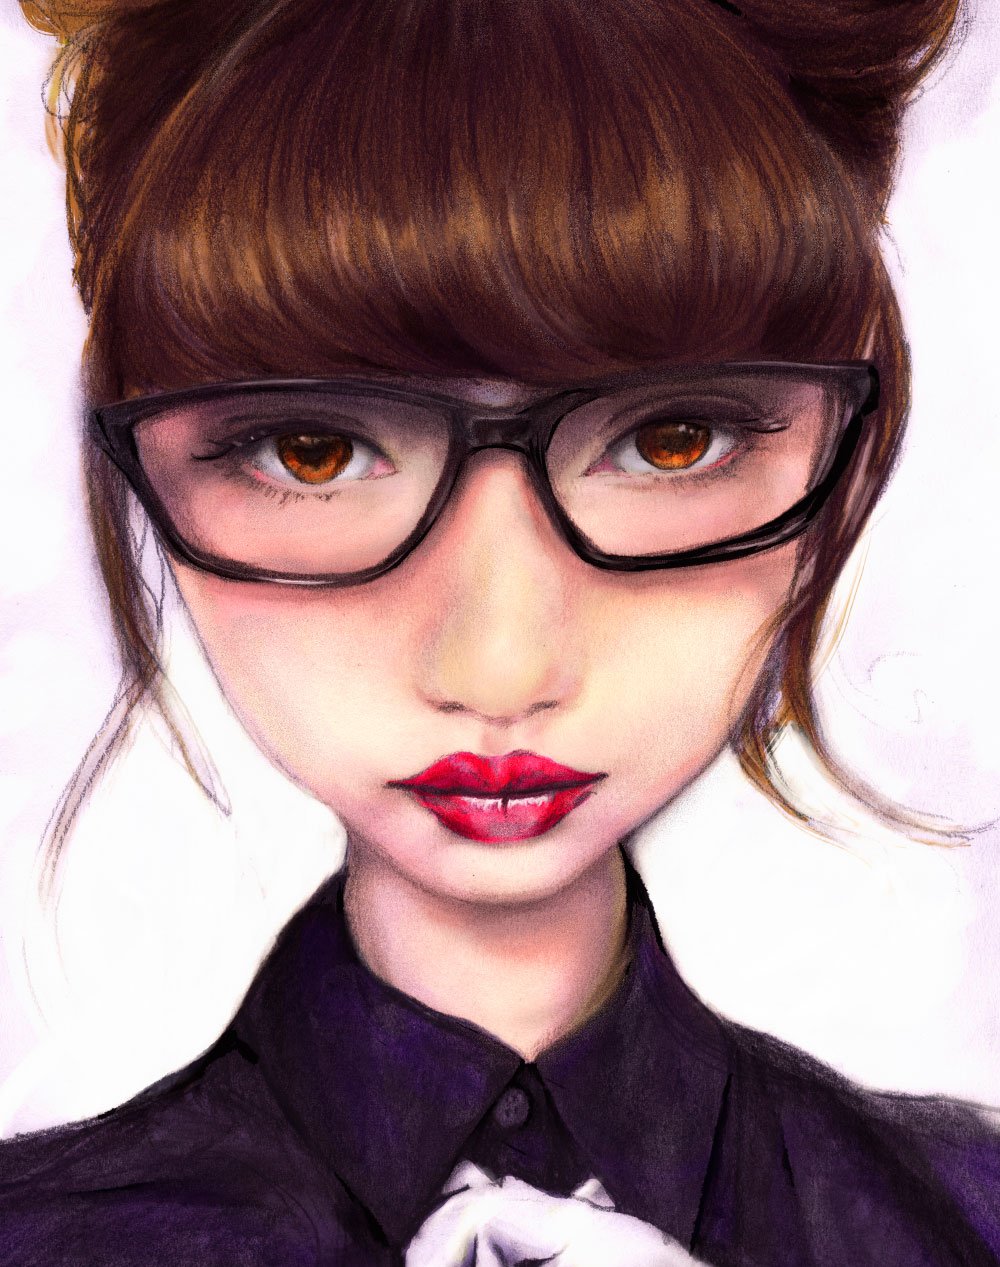 Artist Danny Roberts Portrait of Japanese Model Risa Nakamura (RisaDoll) wearing Glasses